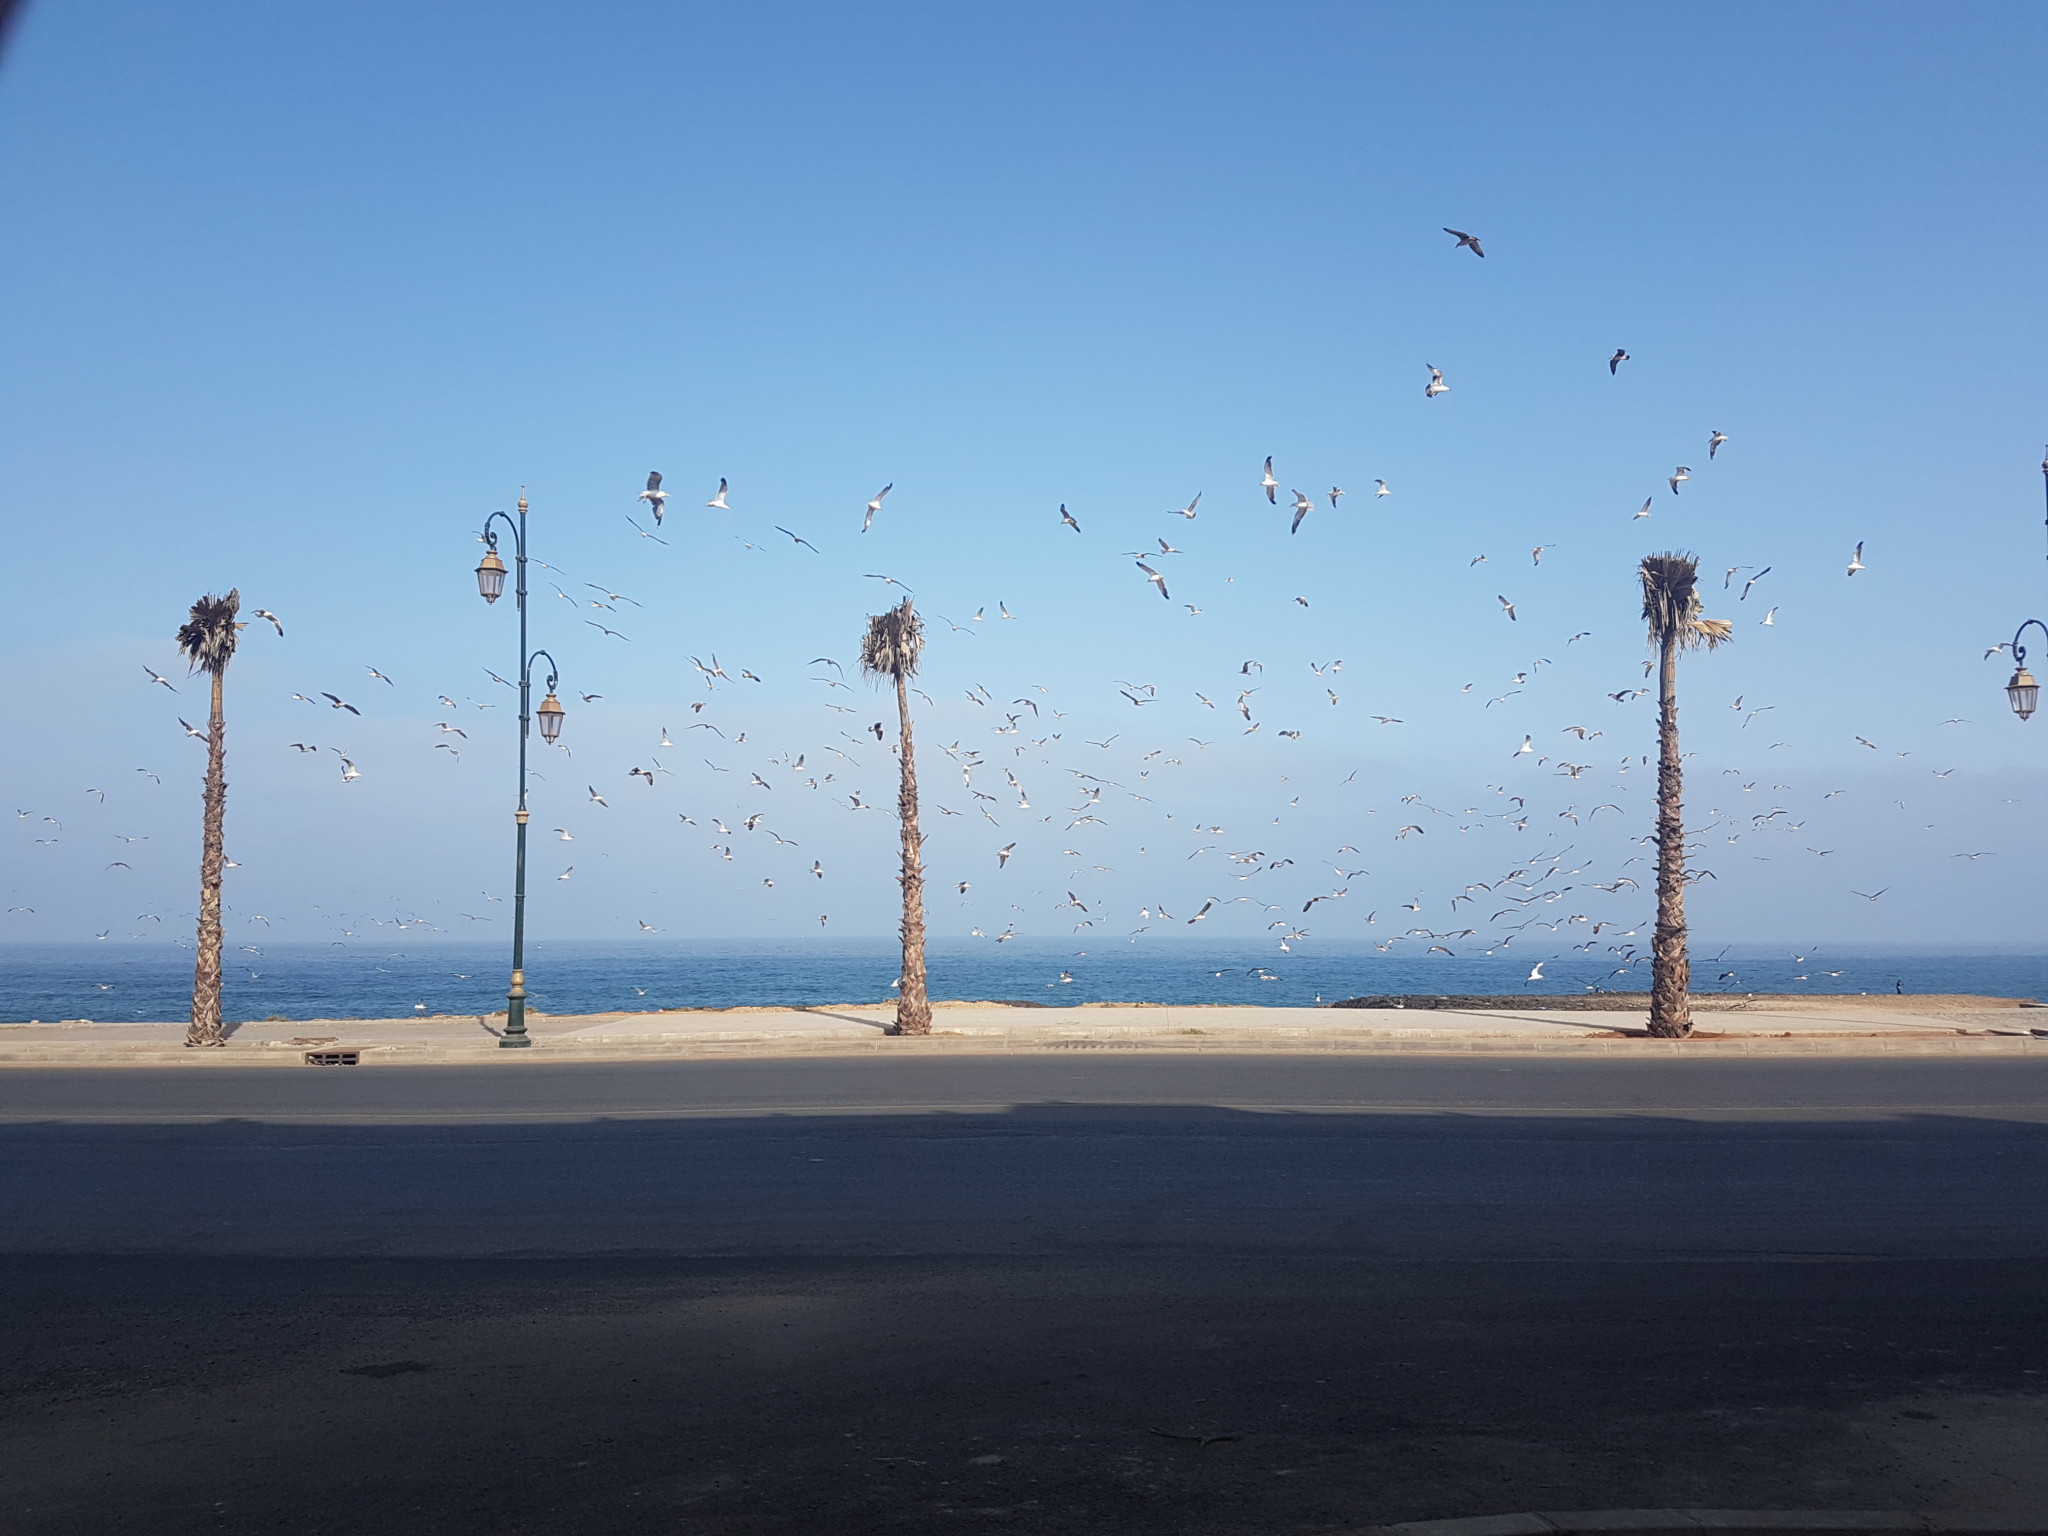 Tons of Seagulls